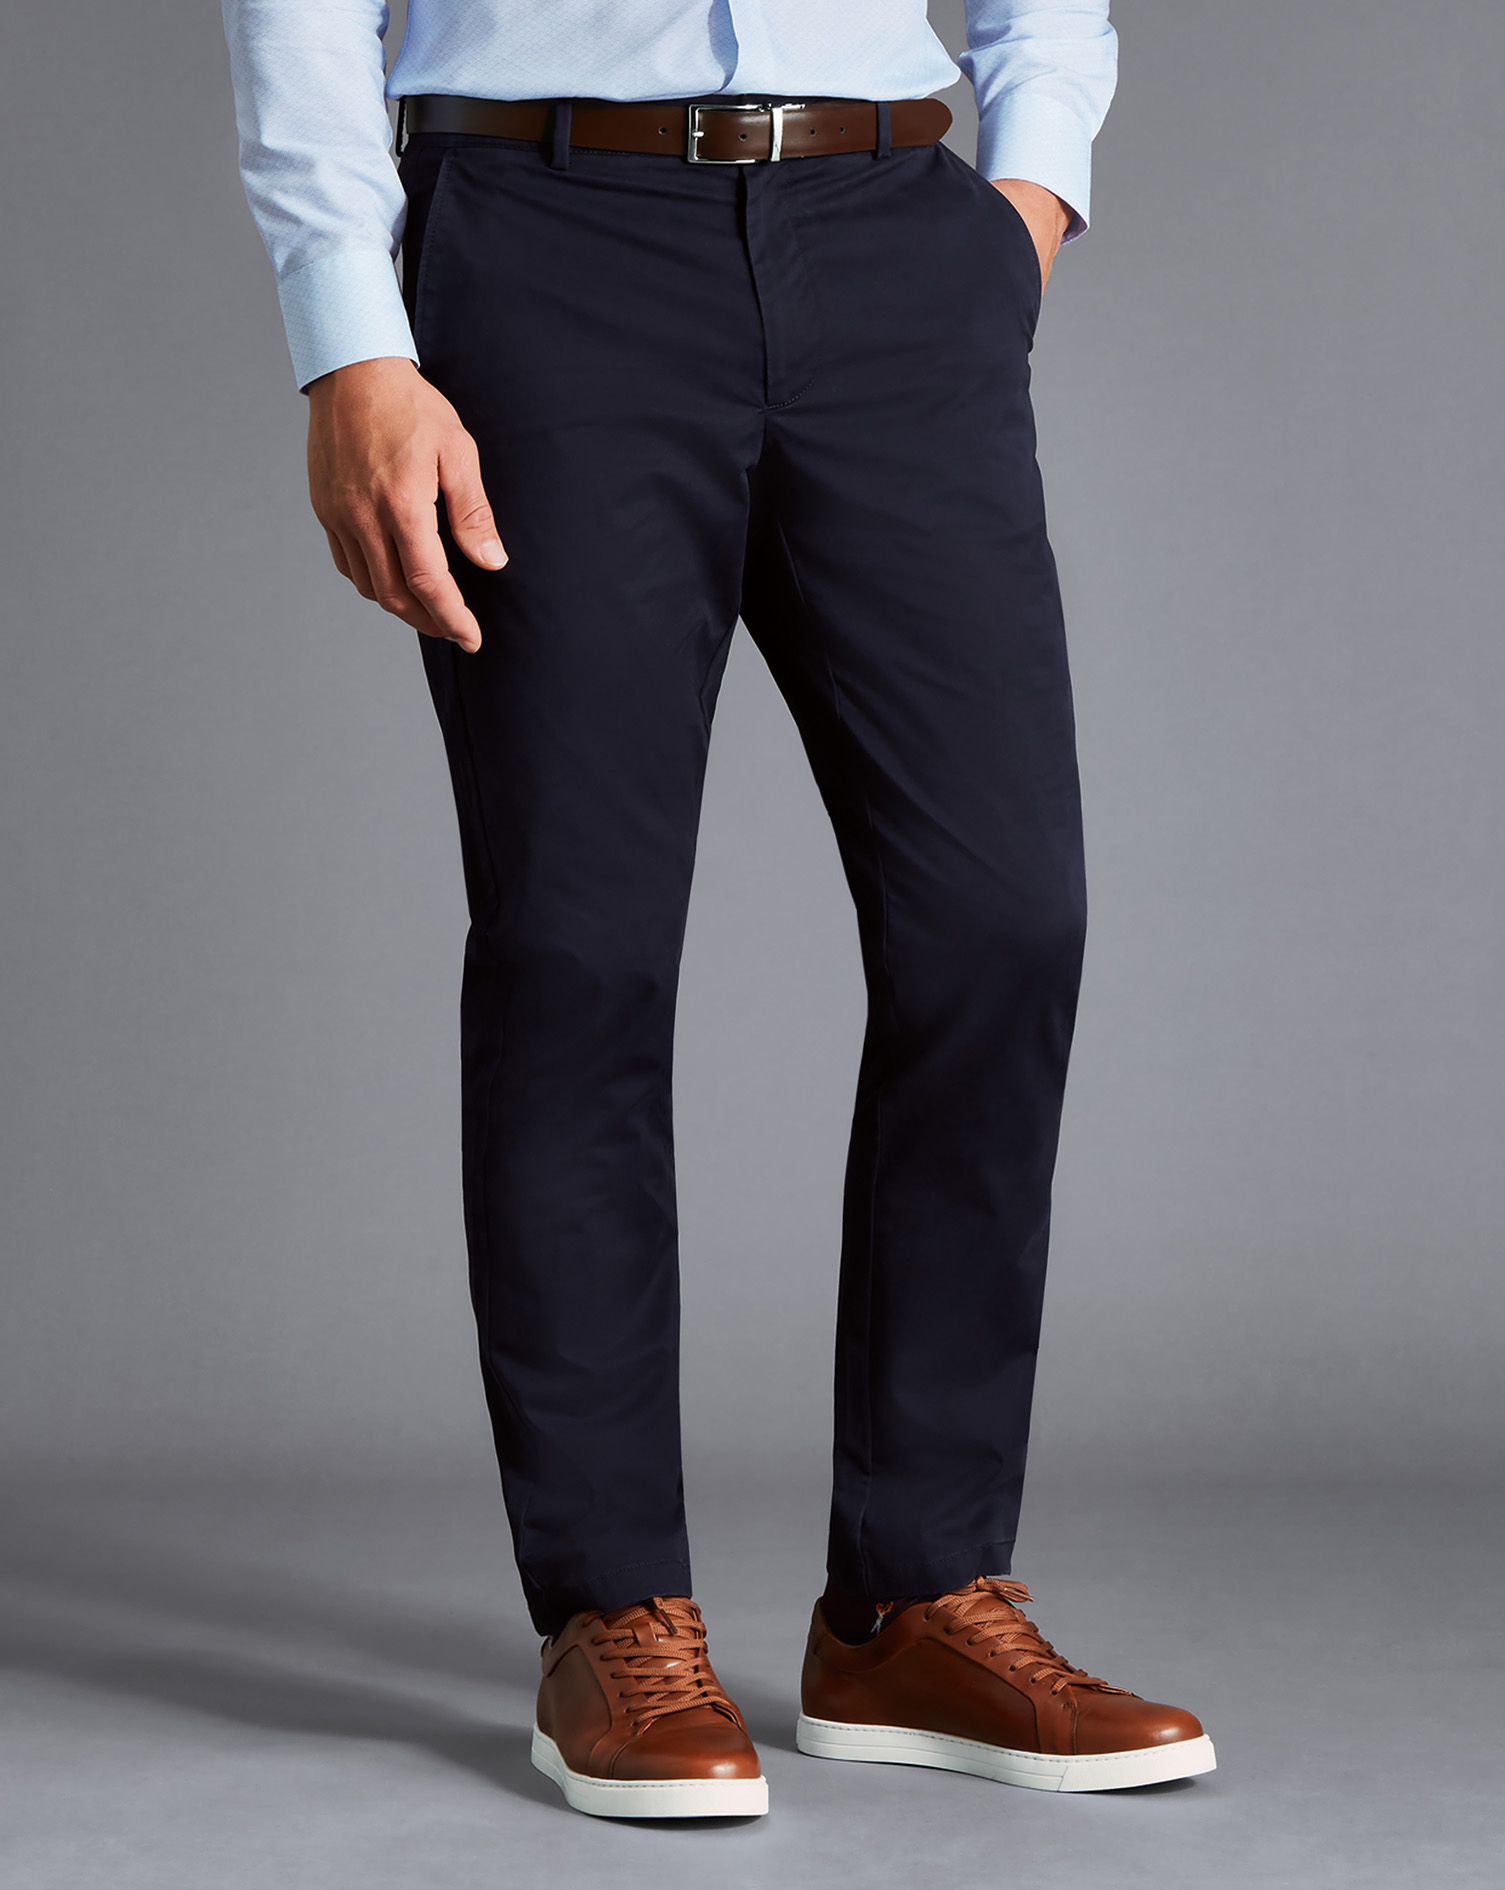 Men's Charles Tyrwhitt Lightweight Trousers - Navy Blue Size W34 L32 Cotton
